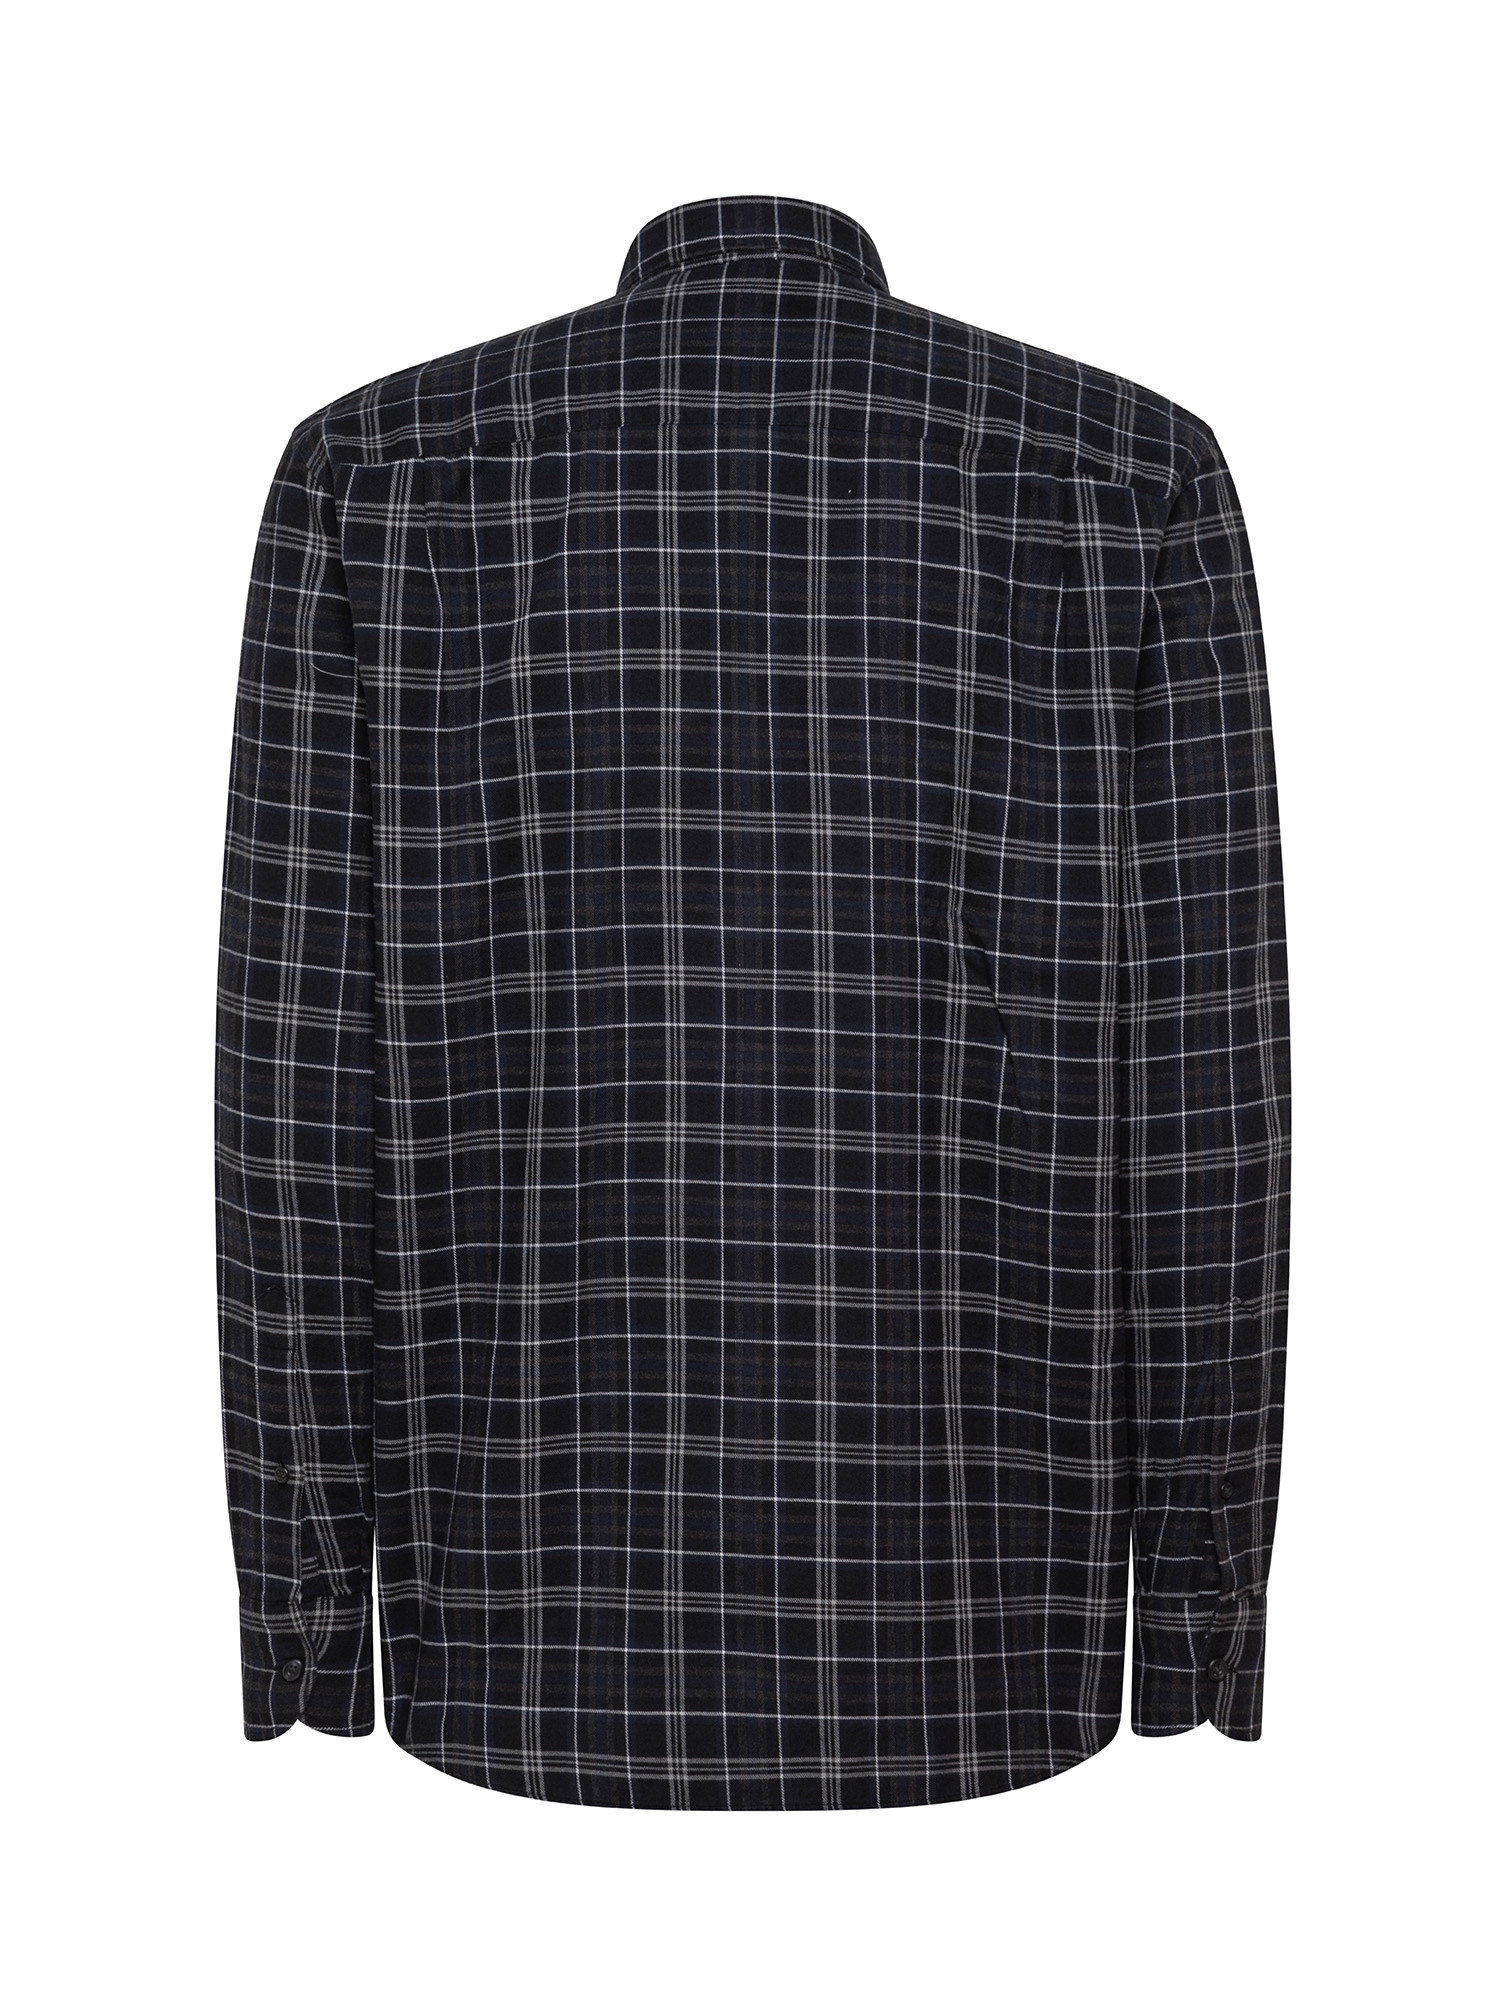 Regular fit shirt in soft organic cotton flannel, Blue, large image number 1